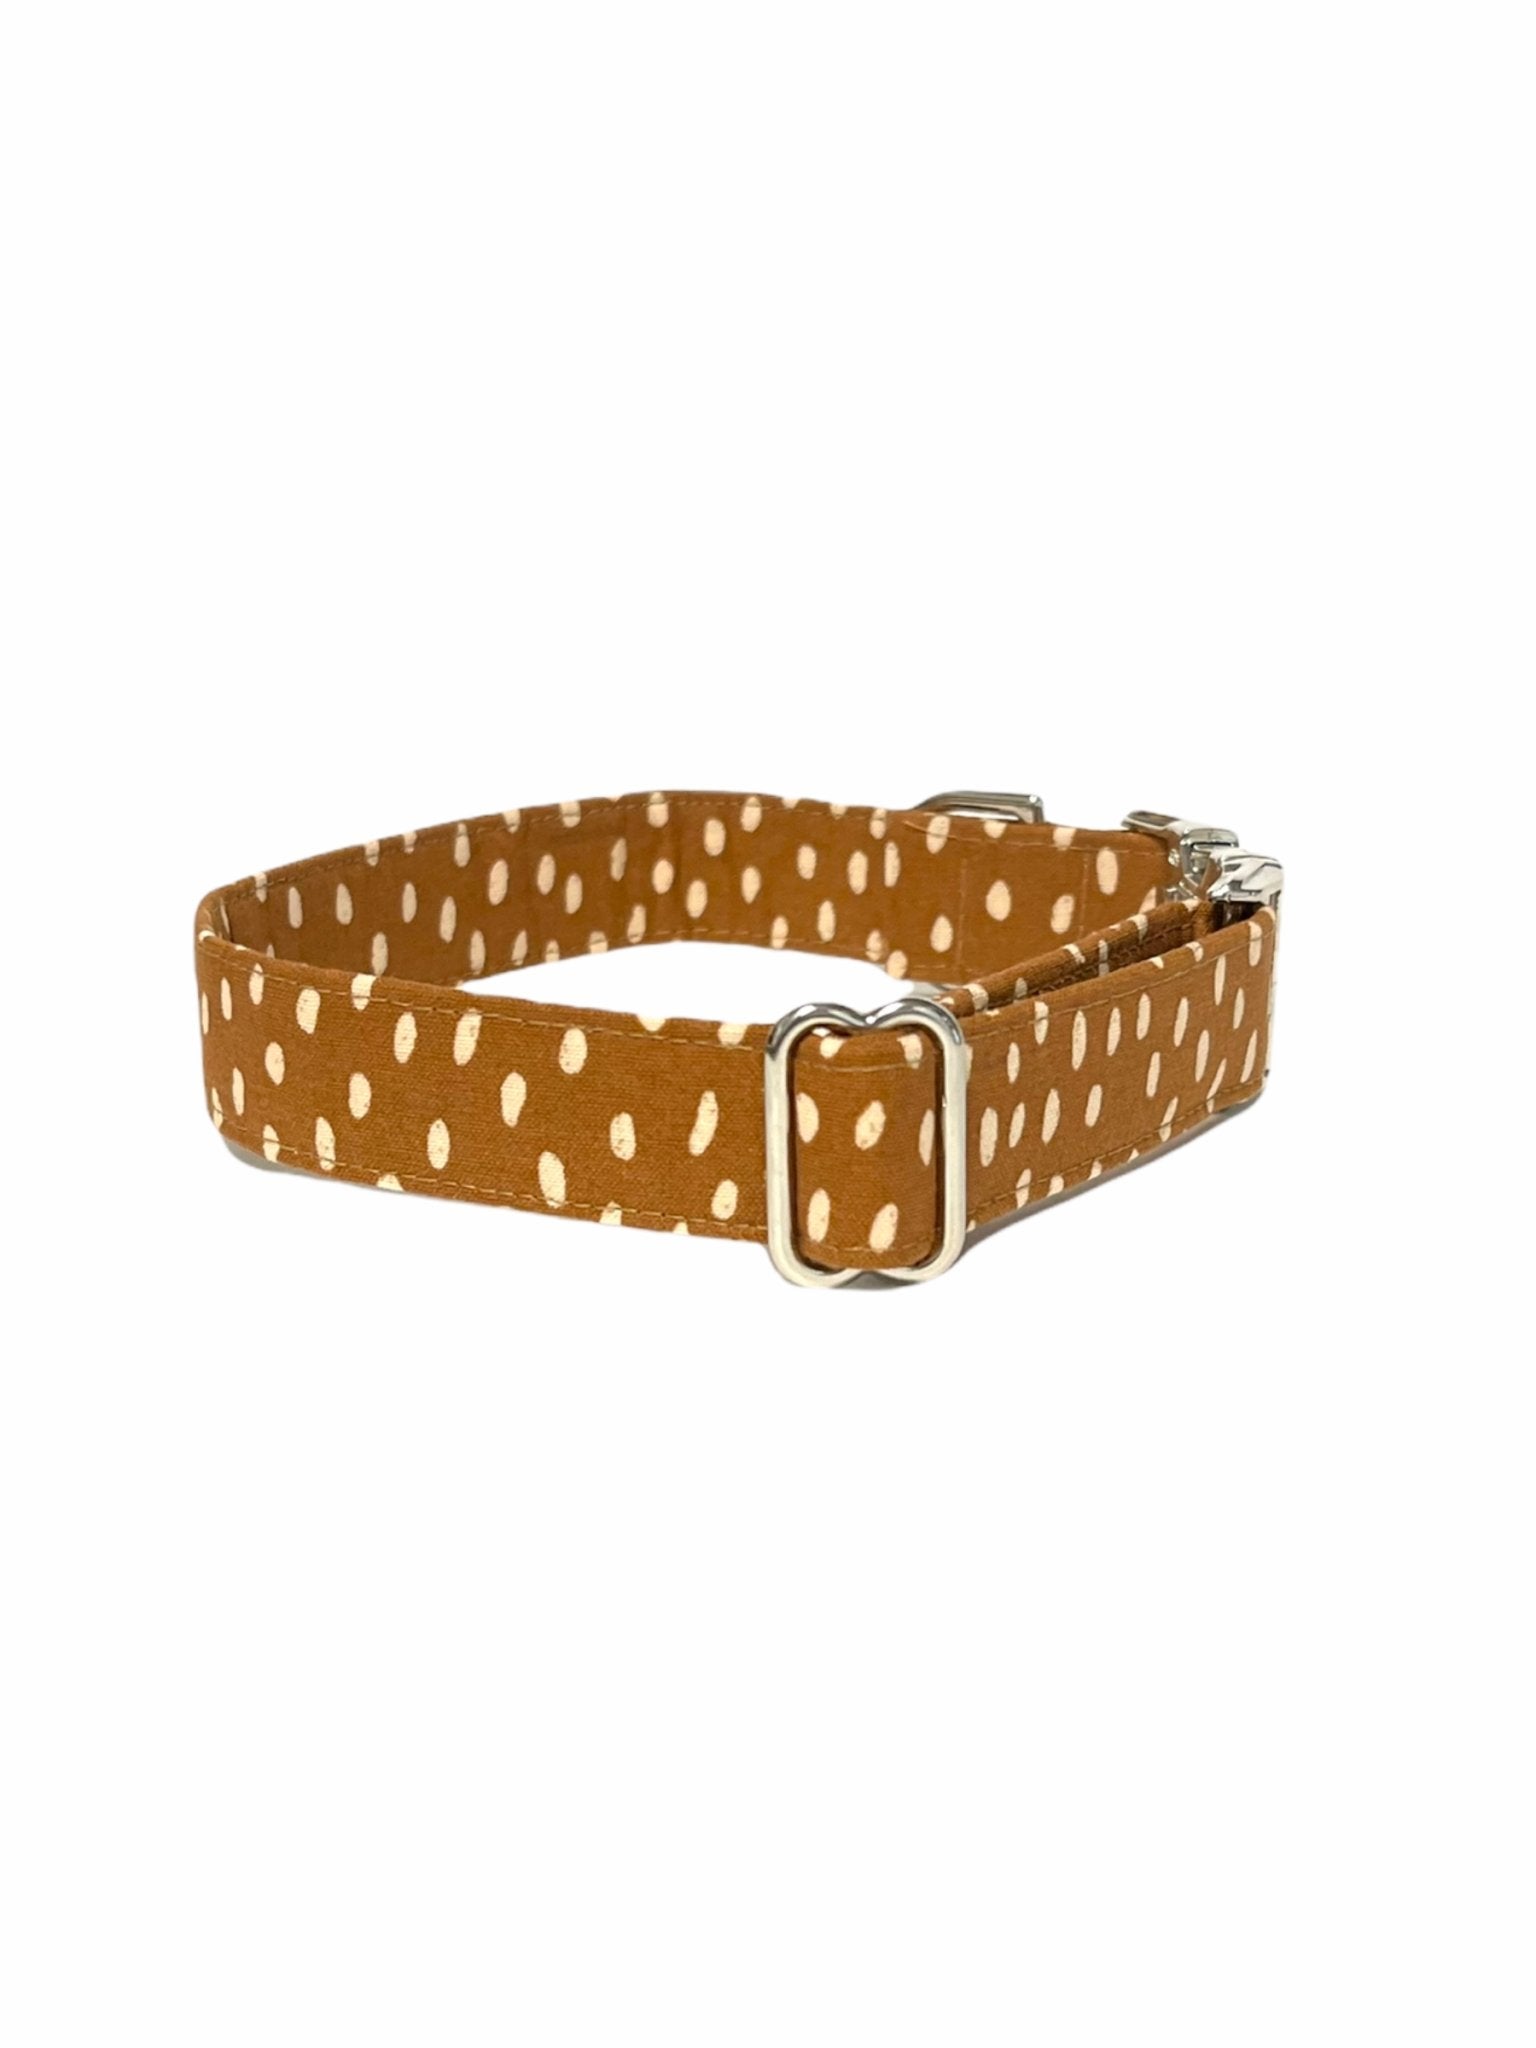 Caramel Dotty Dog Collar - Fabric Style - Dog ID tag